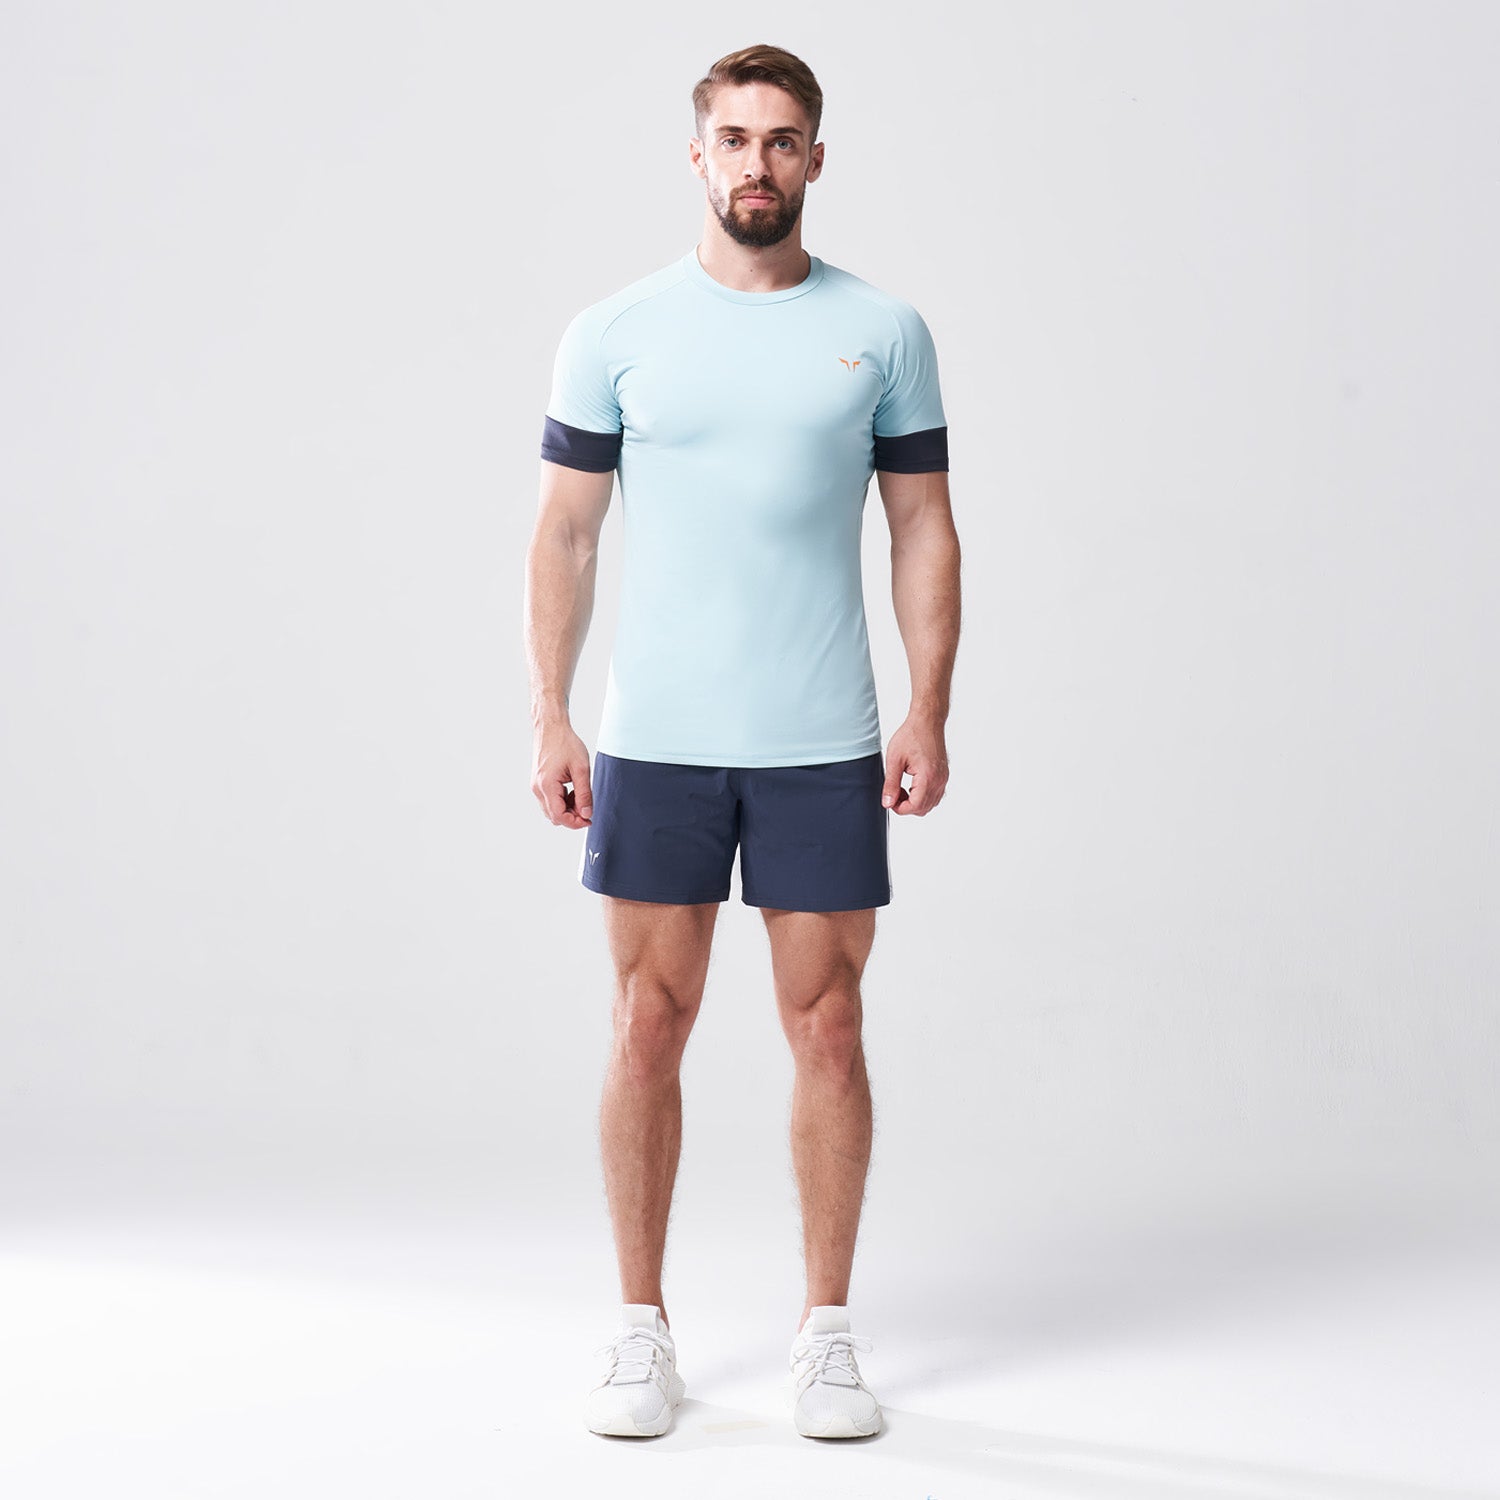 squatwolf-gym-wear-lab360-raglan-performance-tee-canal-blue-workout-shirts-for-men